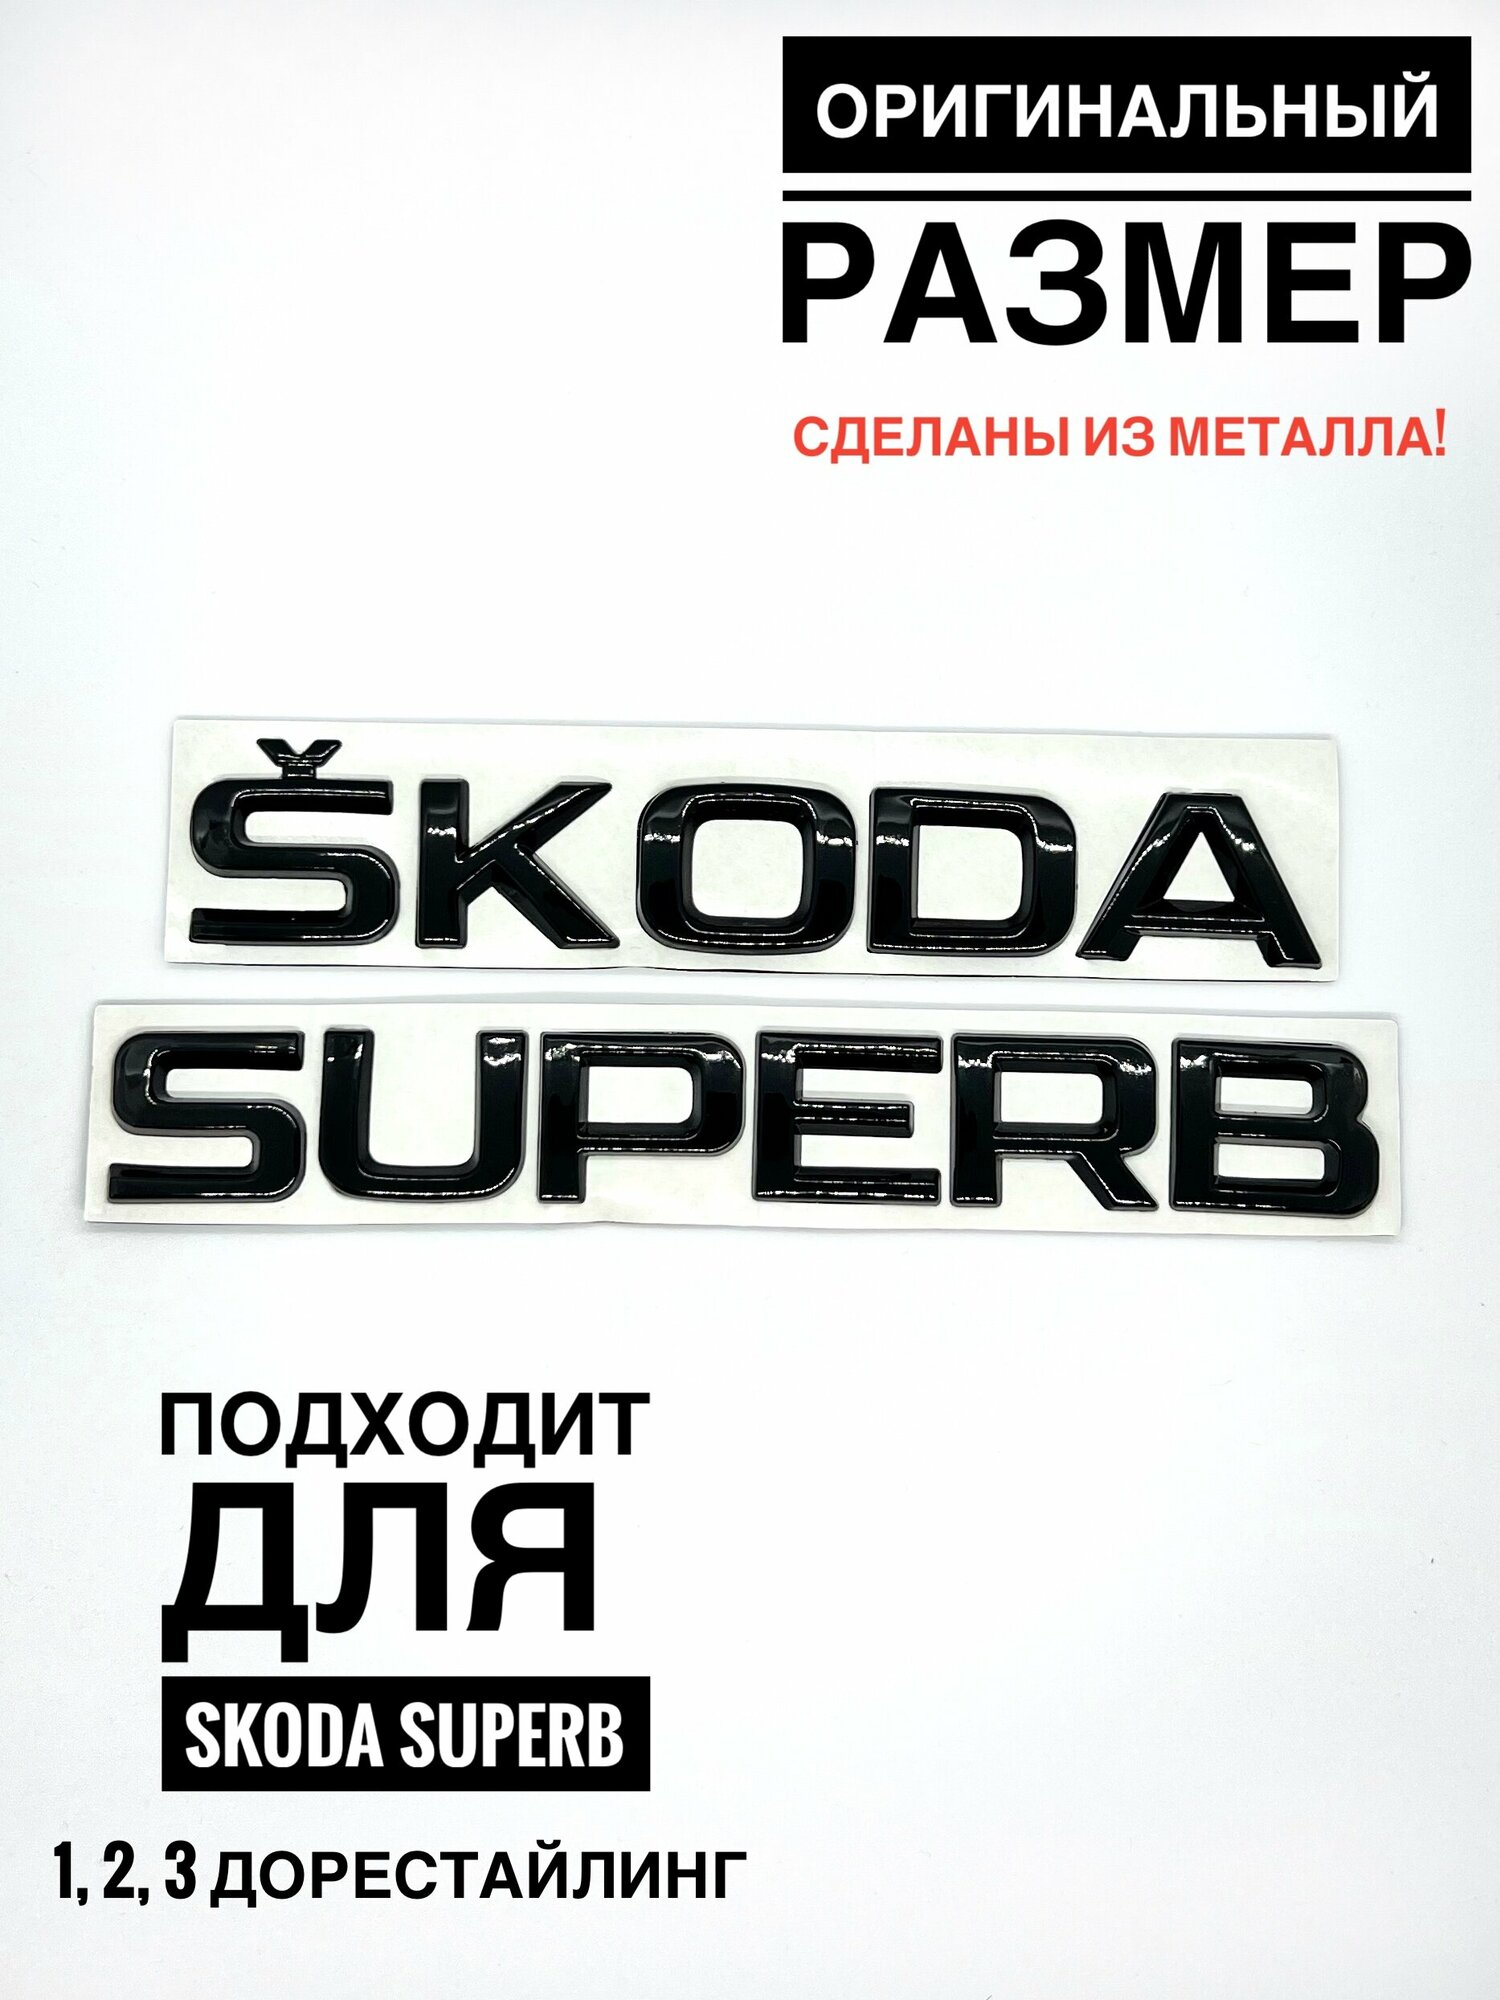 Буквы - надписи на багажник Шкода\Skoda. Металл.